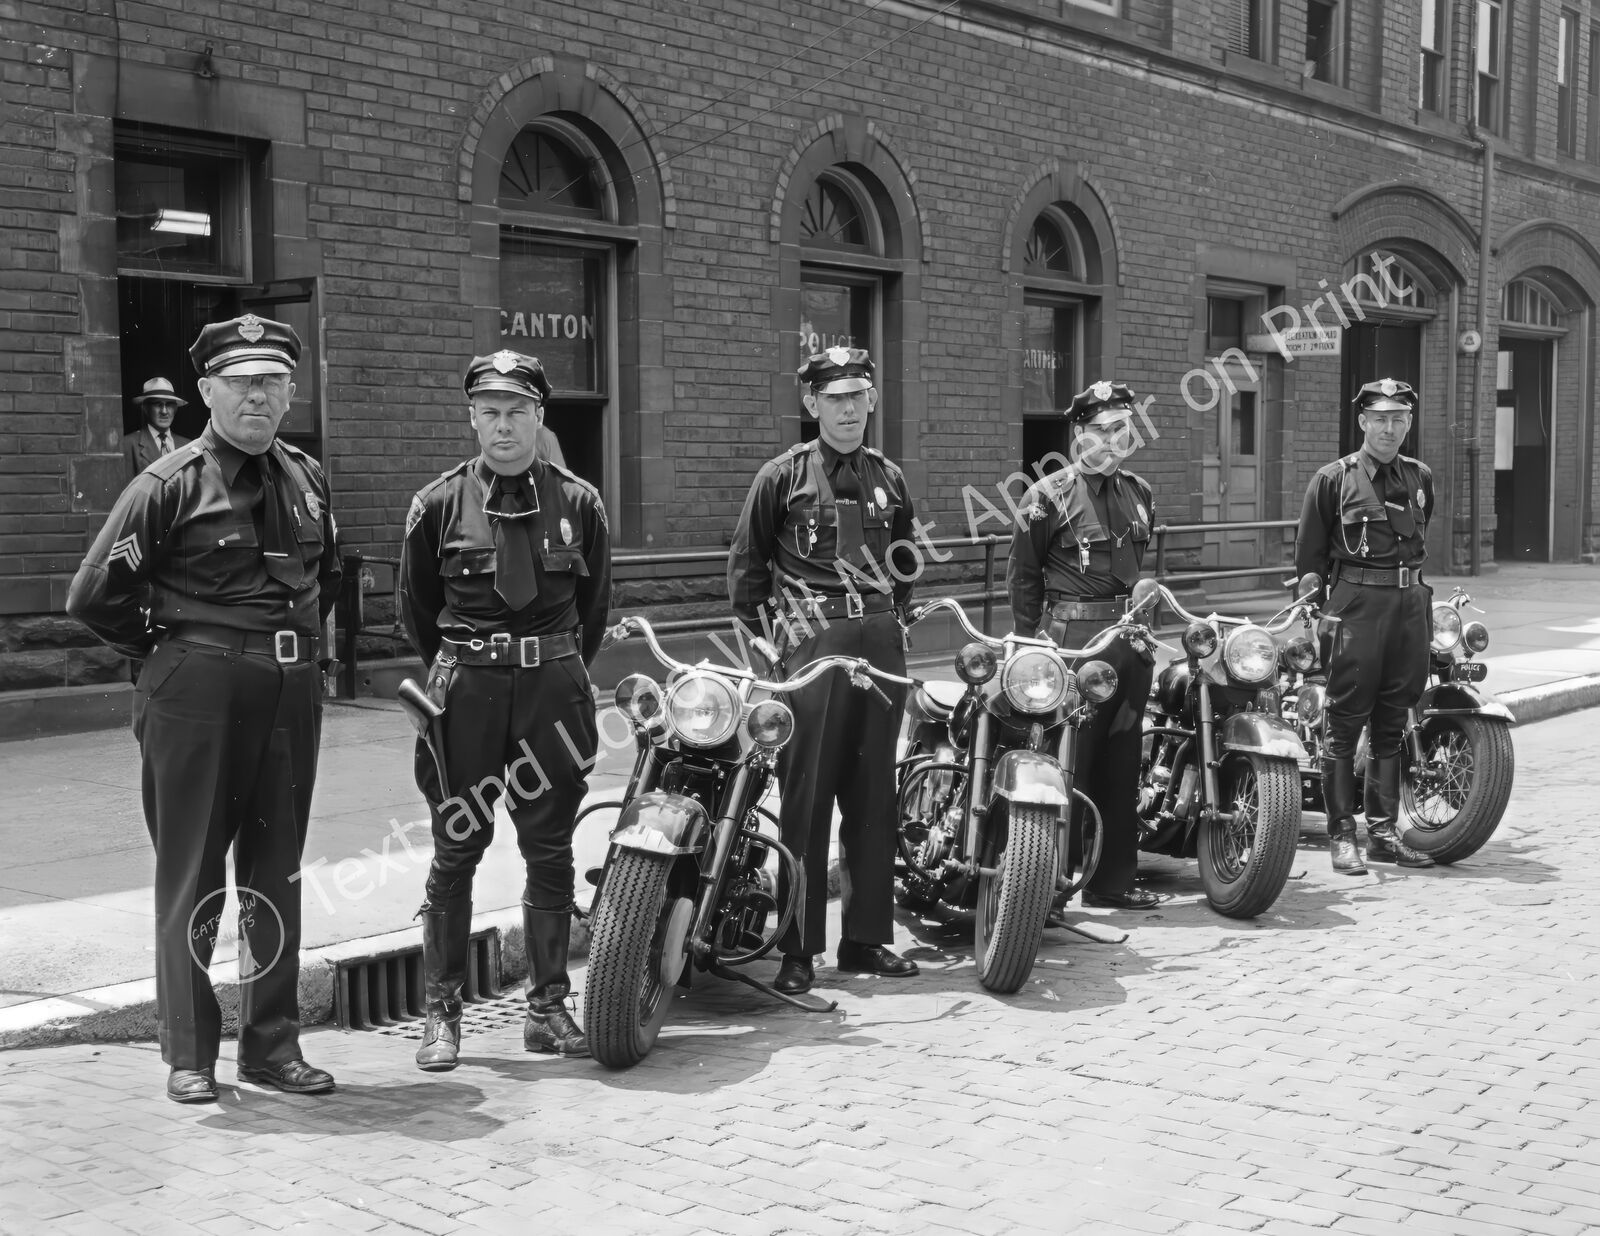 1951 Police Motorcycle Patrol, Canton, Ohio Vintage Old Photo Reprint